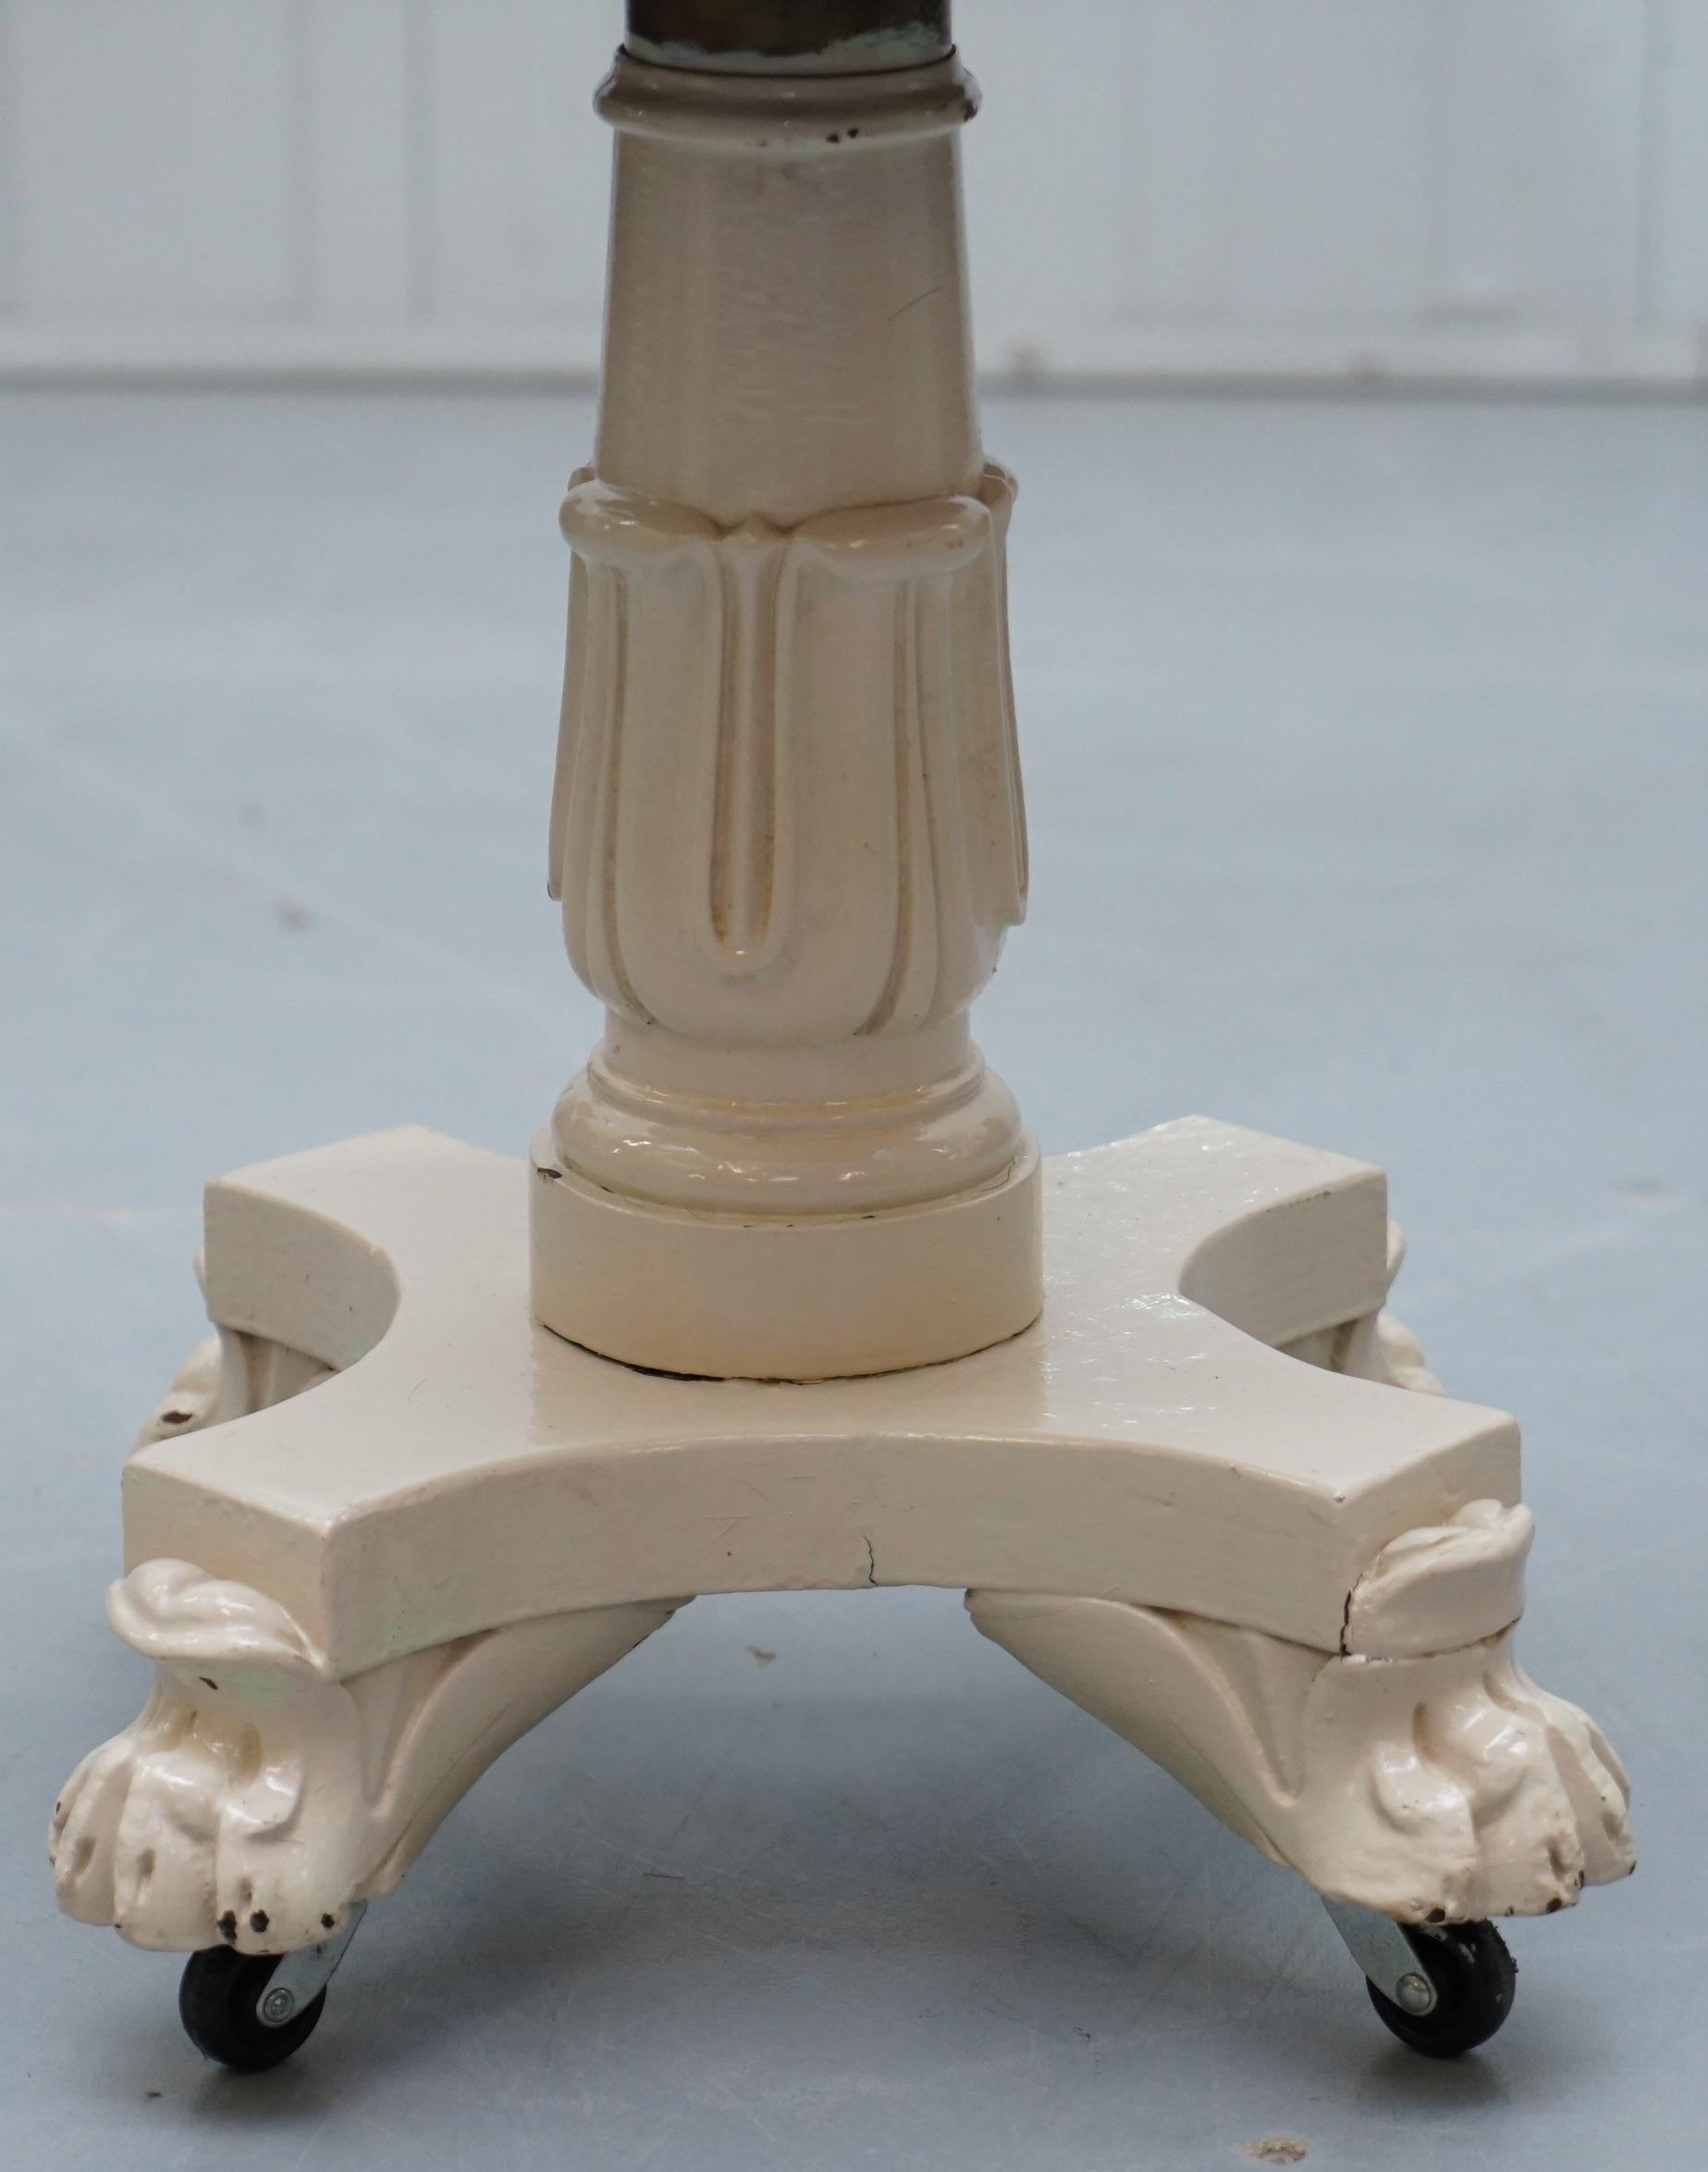 adjustable stool with wheels